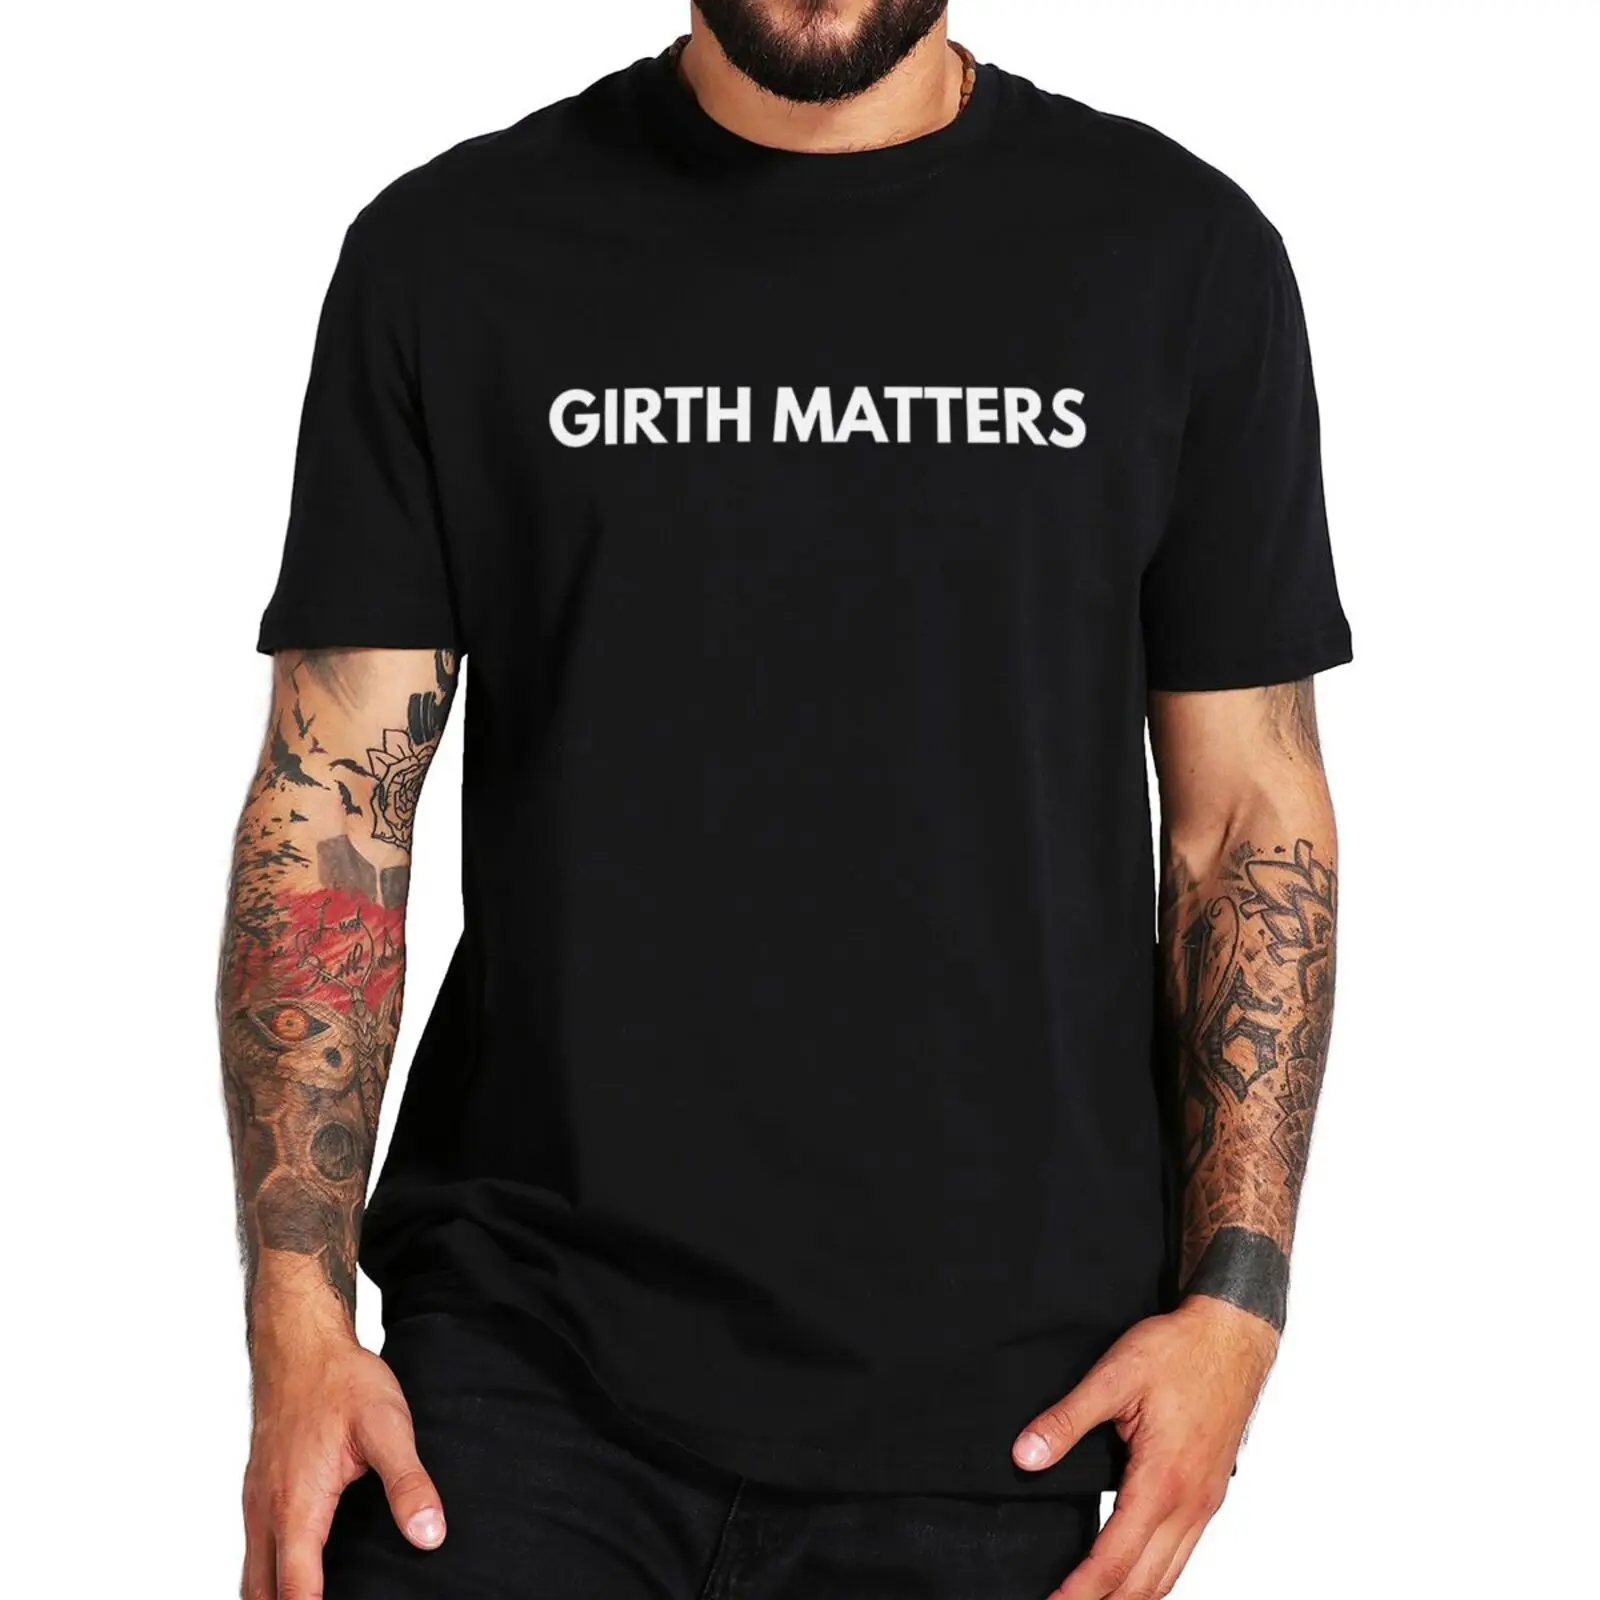 

Girth Matters T Shirt Funny Puns Meme Humor Jokes Tee Tops 100% Cotton Unisex Casual O-neck T-shirts EU Size